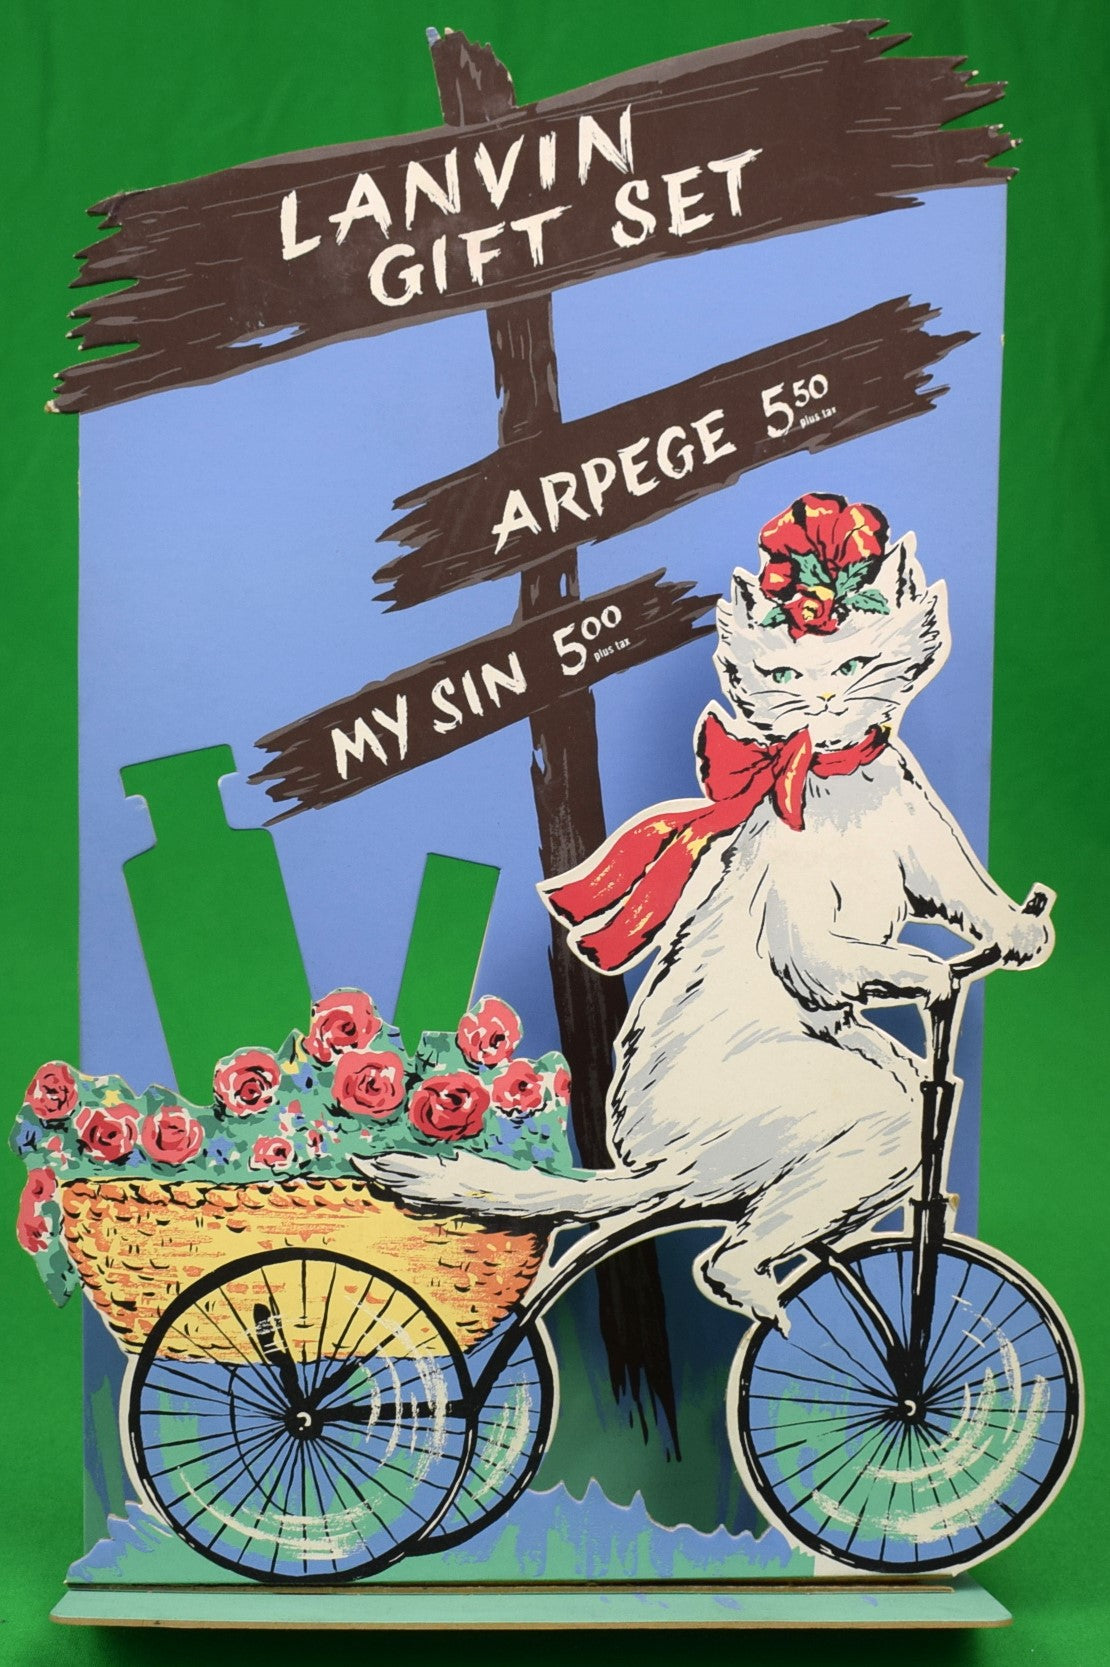 Lanvin Paris Arpege/ My Sin Gift Set Advert Sign w/ Cat On Bicycle